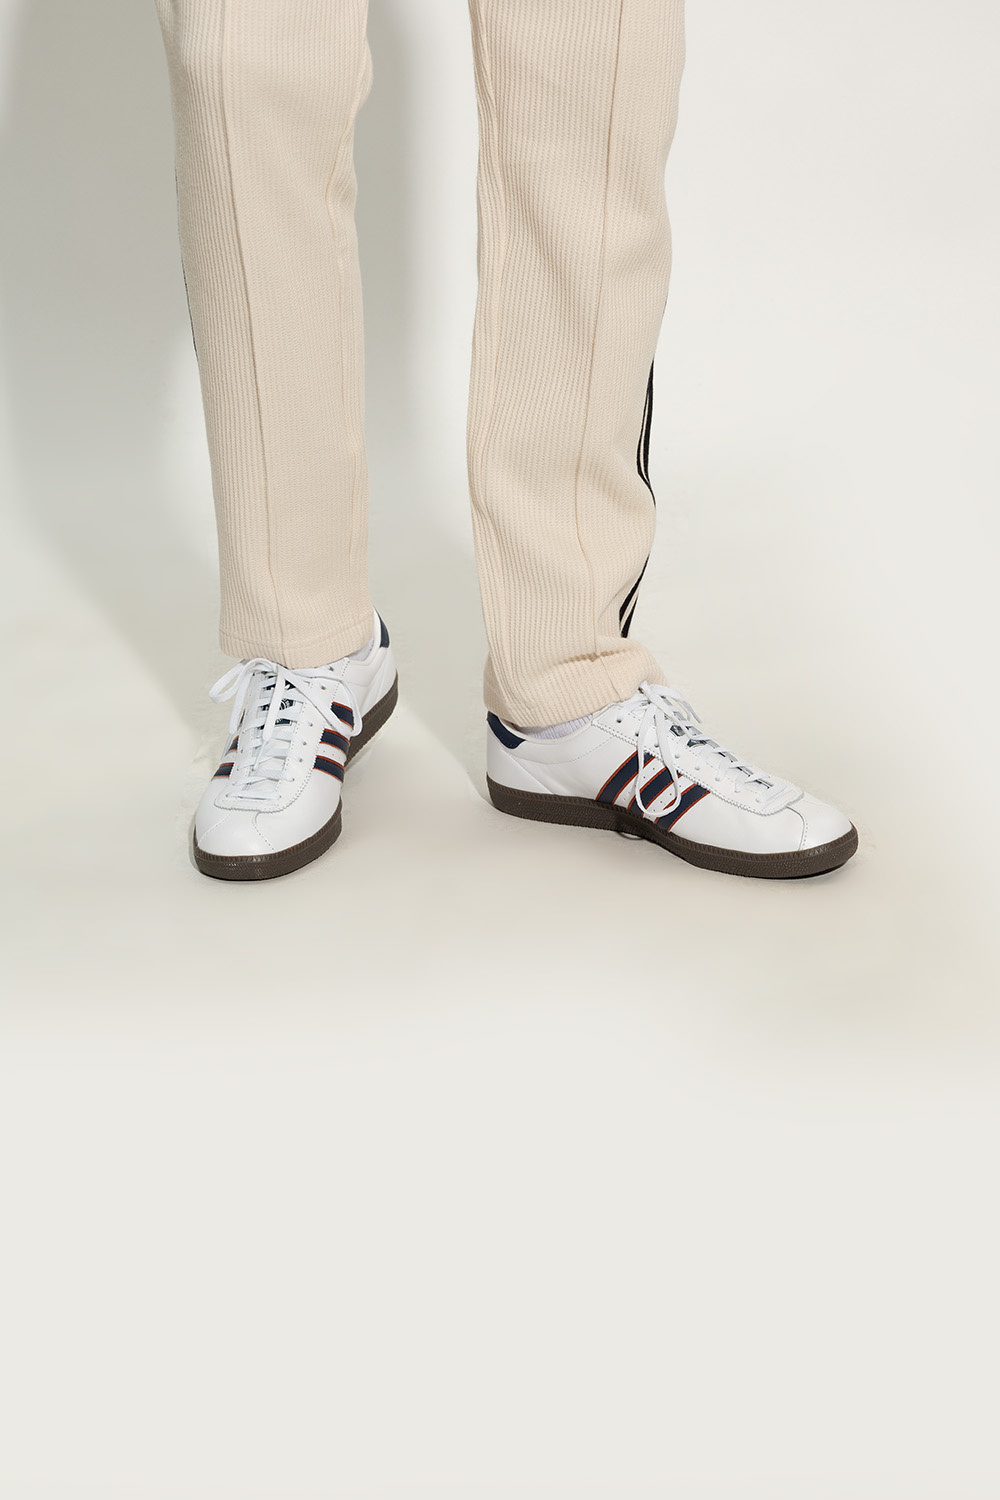 Uitrusten visie Heup Adidas Yeezy Foam RNNR SULFUR GV6775 - InteragencyboardShops Australia -  White 'HOCHELAGA SPZL' sneakers ADIDAS Originals